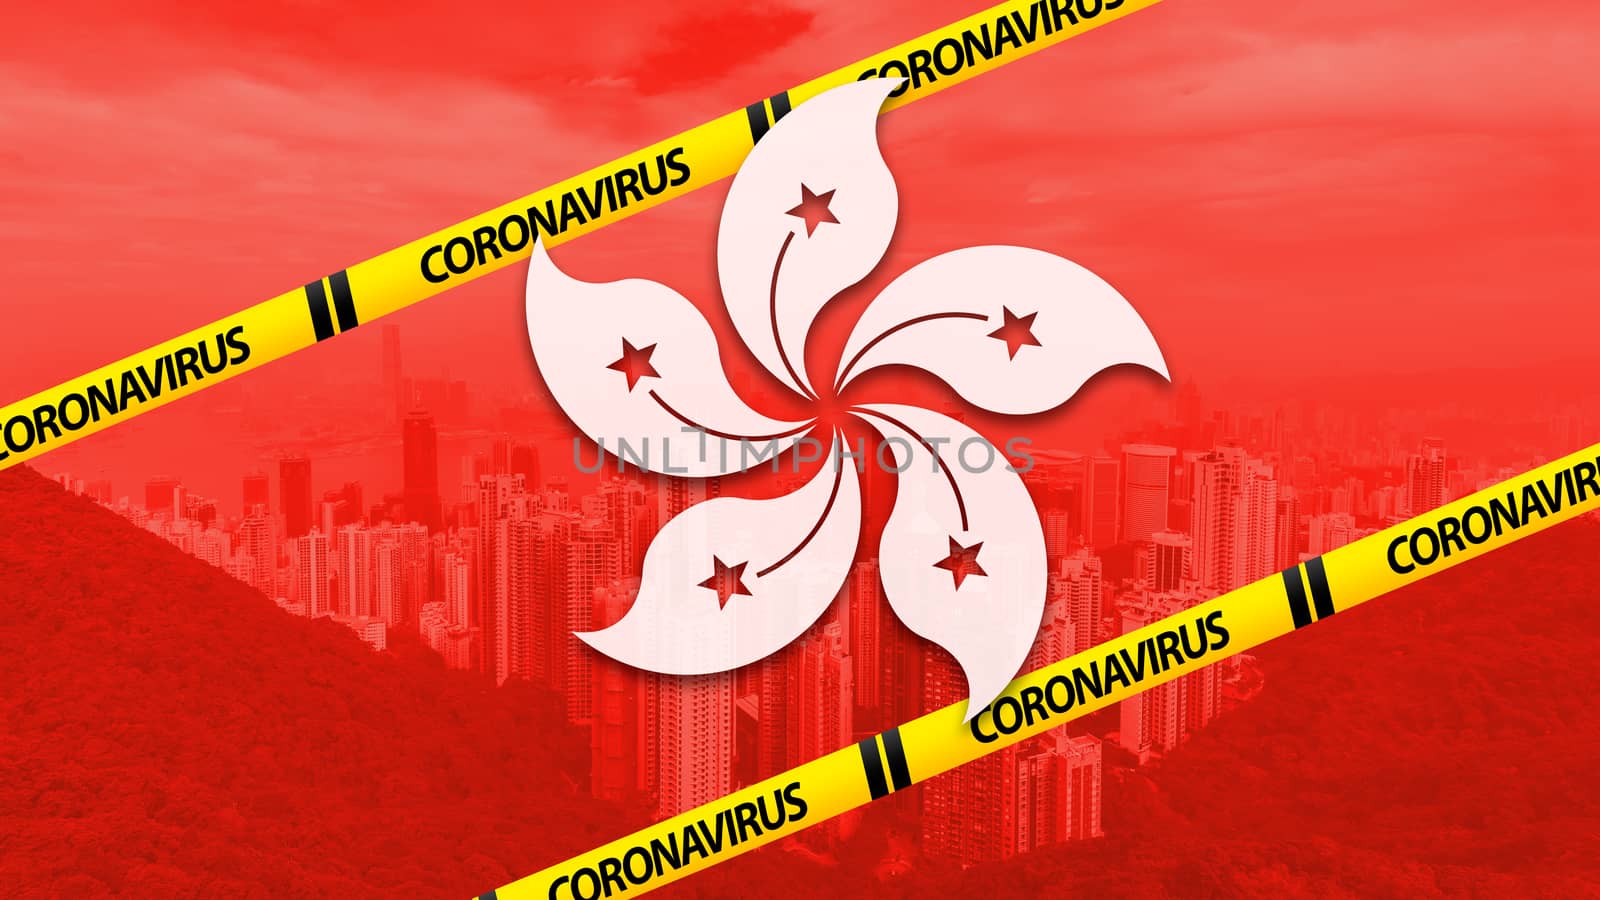 Hong Kong skyline with coronavirus quarantine warning signs. by tanaonte